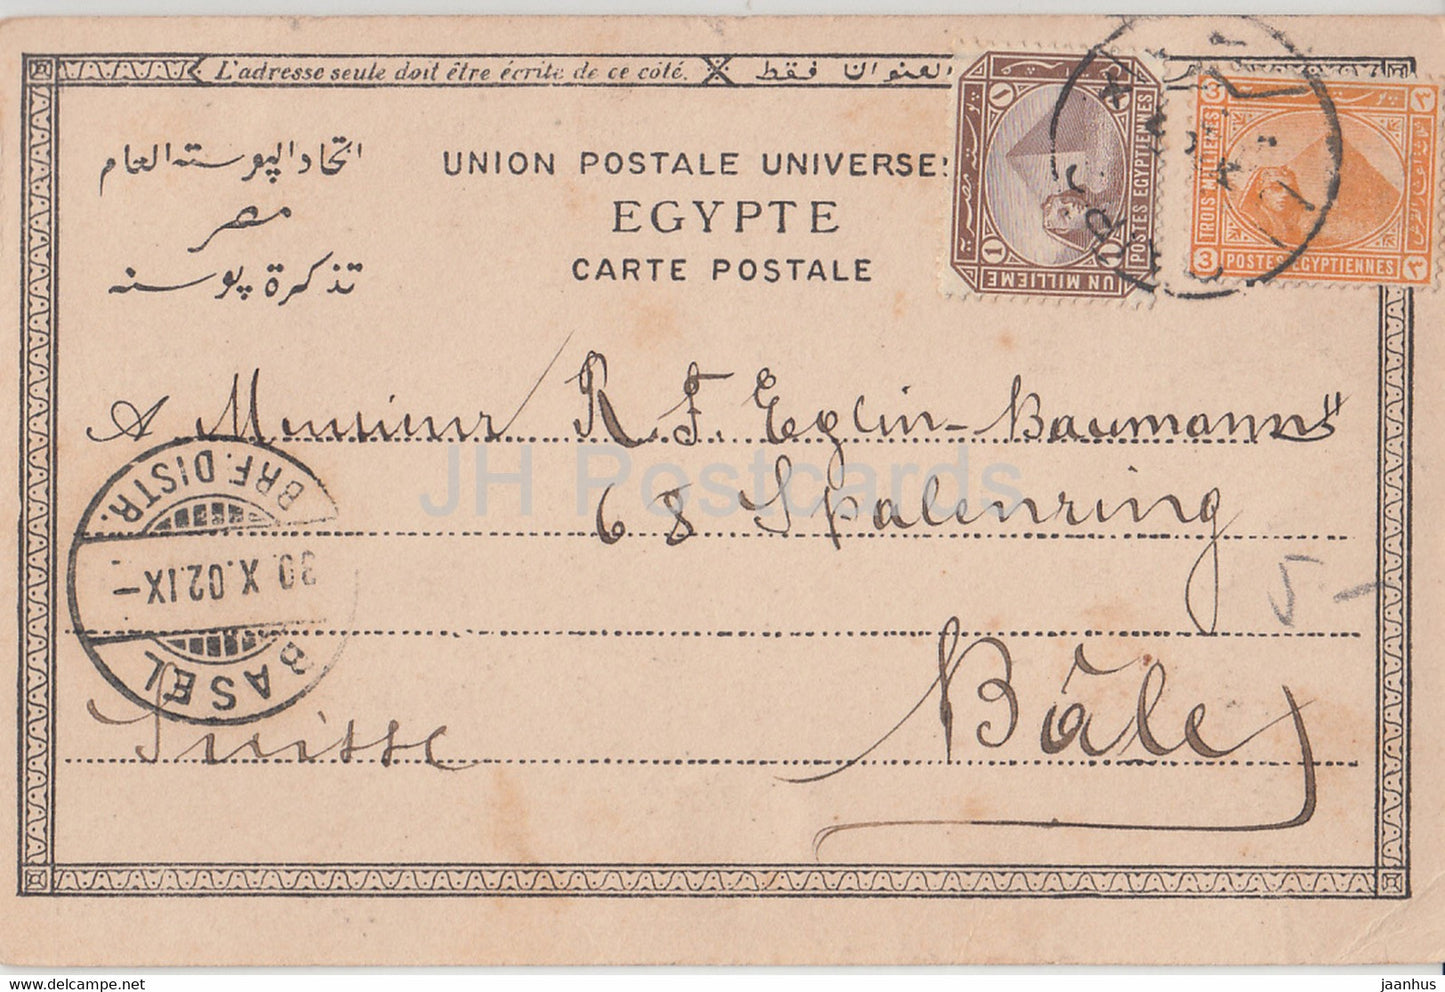 Prise d'un crocodile - animals - 335 - old postcard - 1902 - Egypt - used